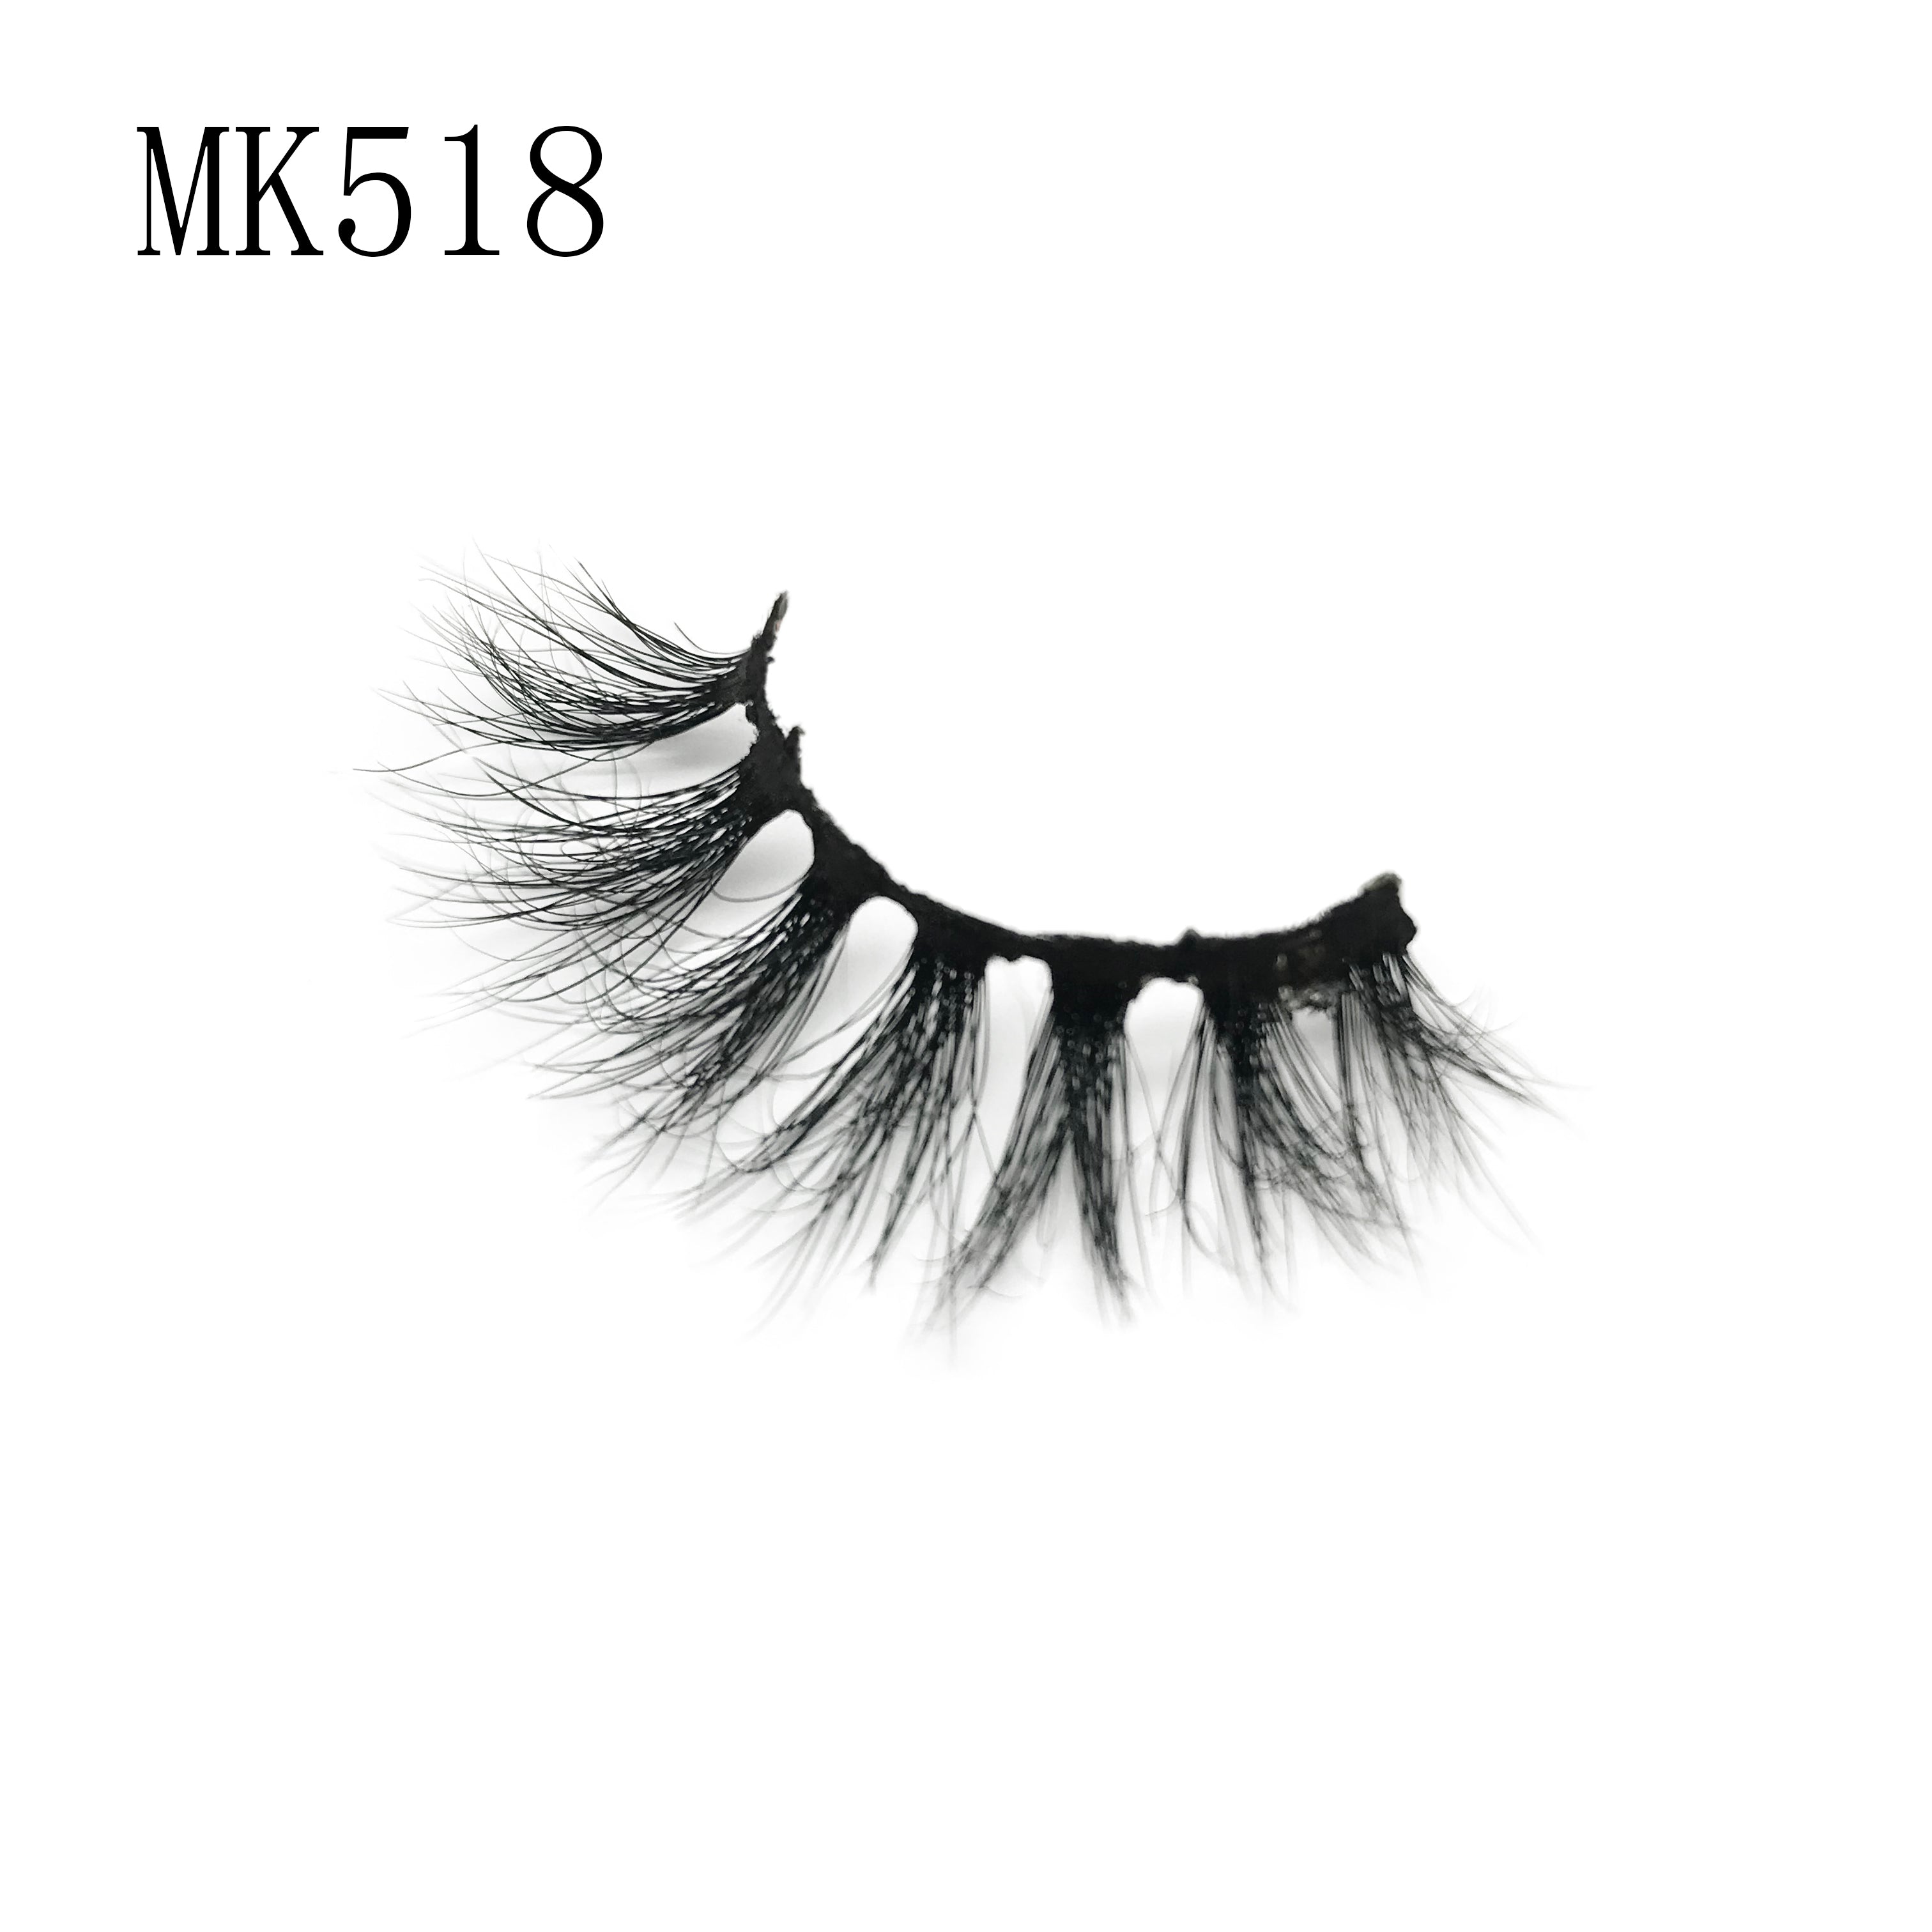 3D Mink Lashes - MK518